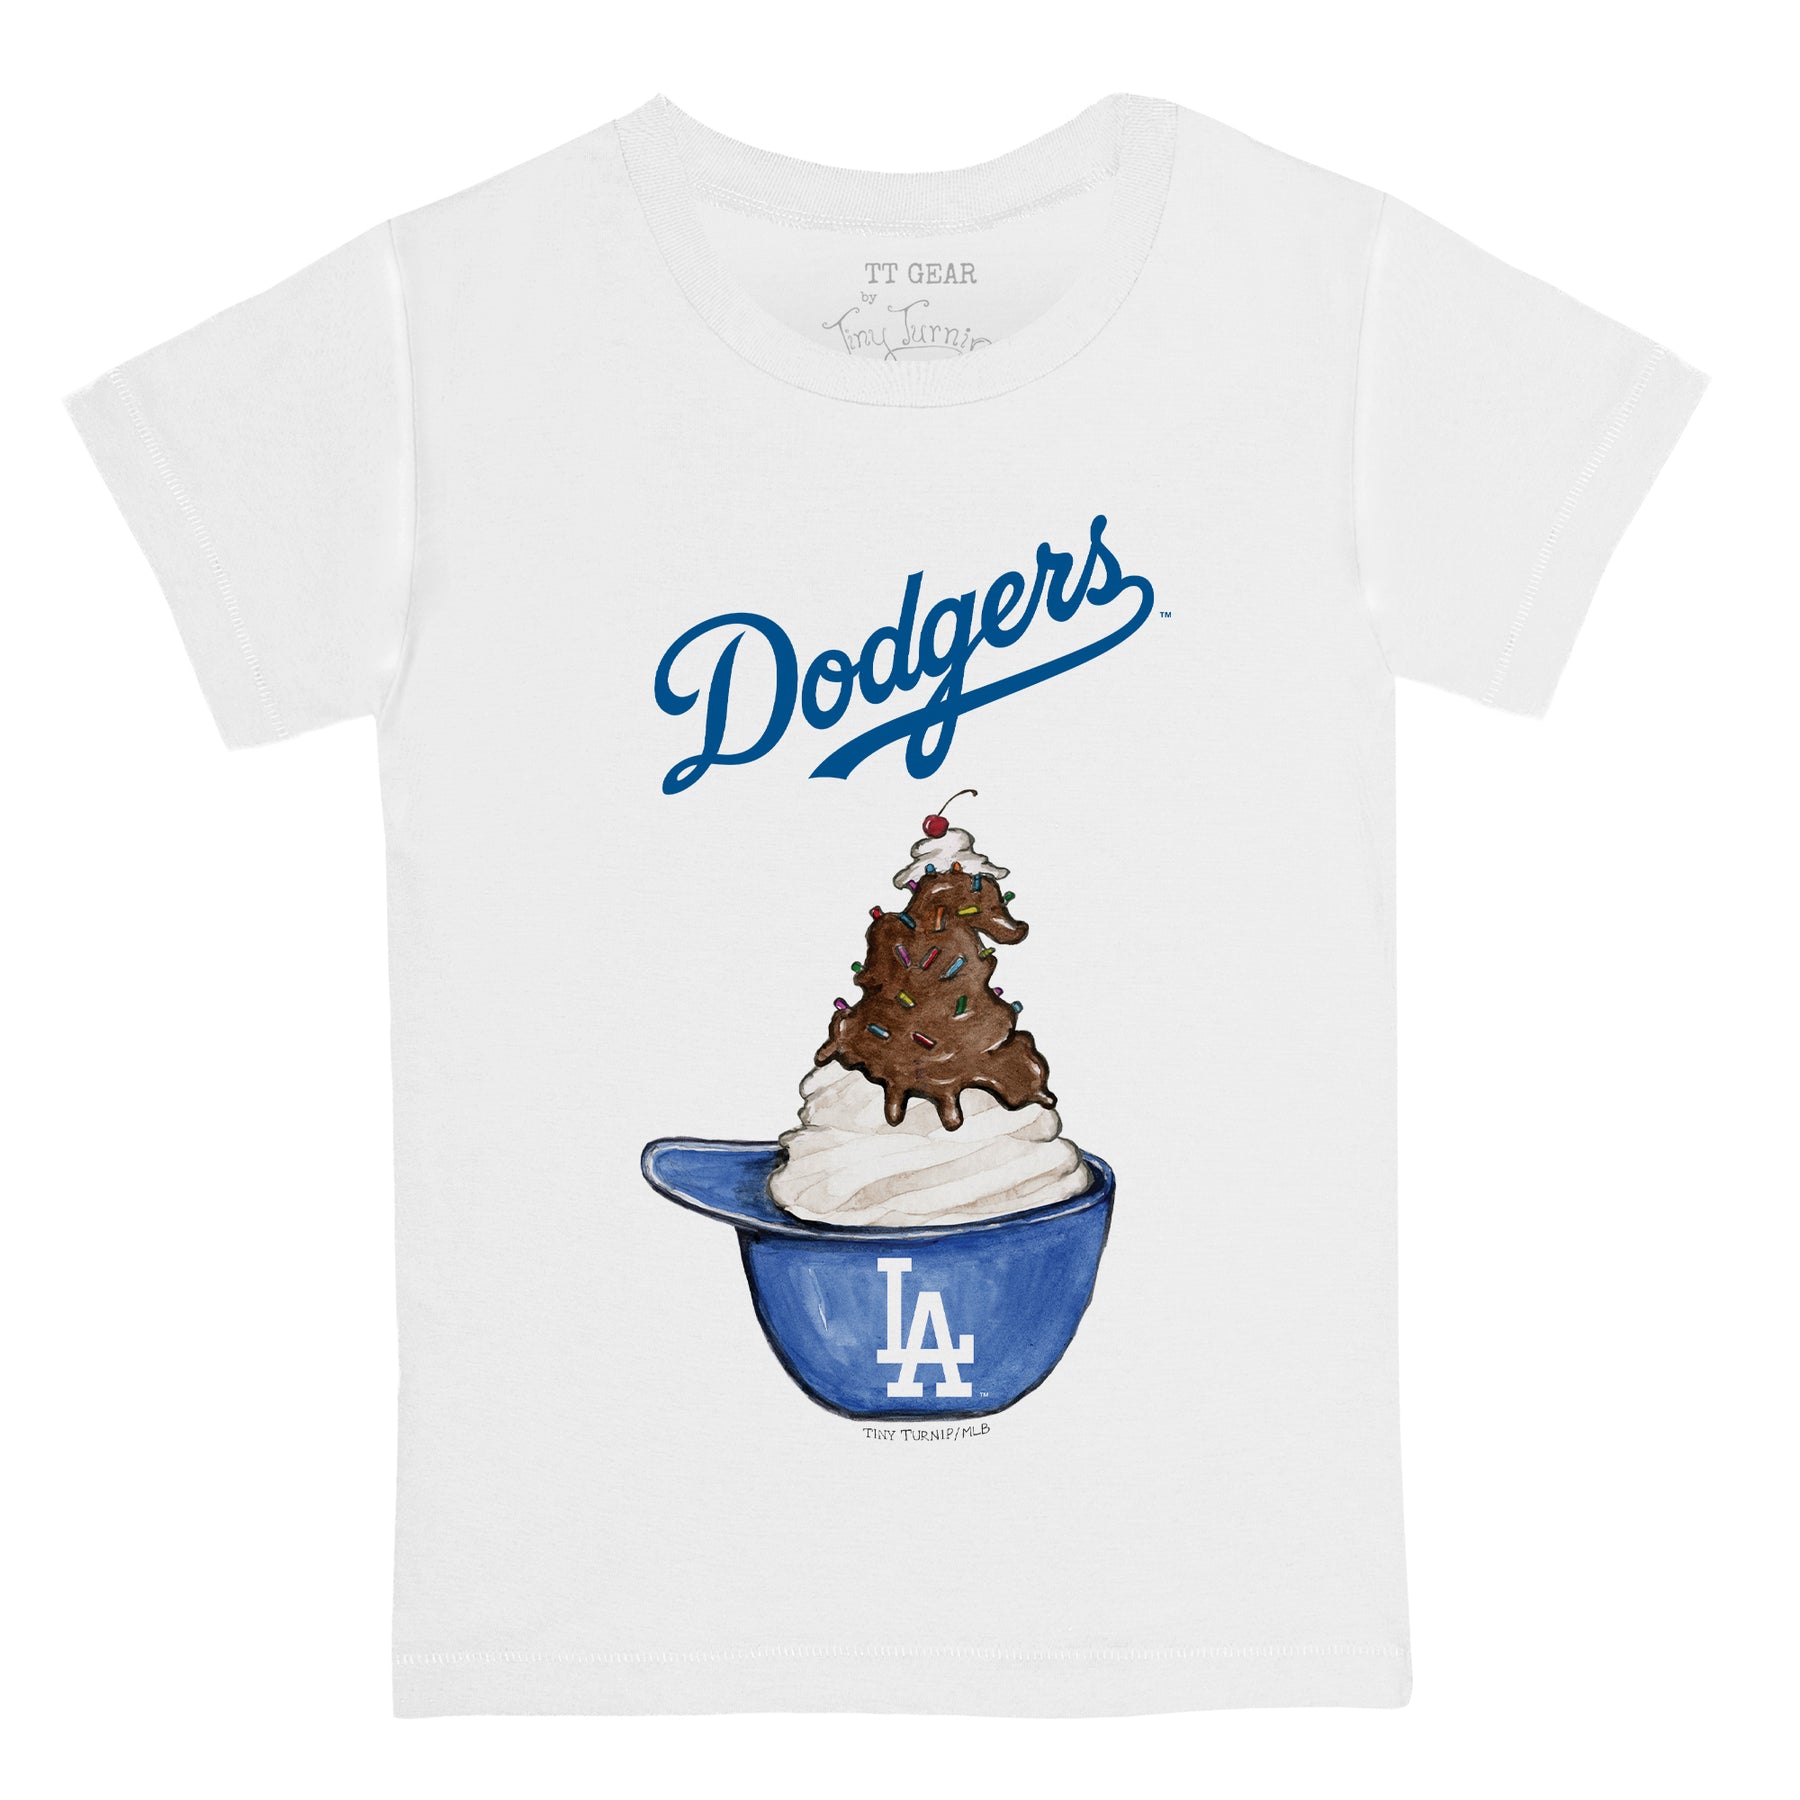 Los Angeles Dodgers Apparel & Gear